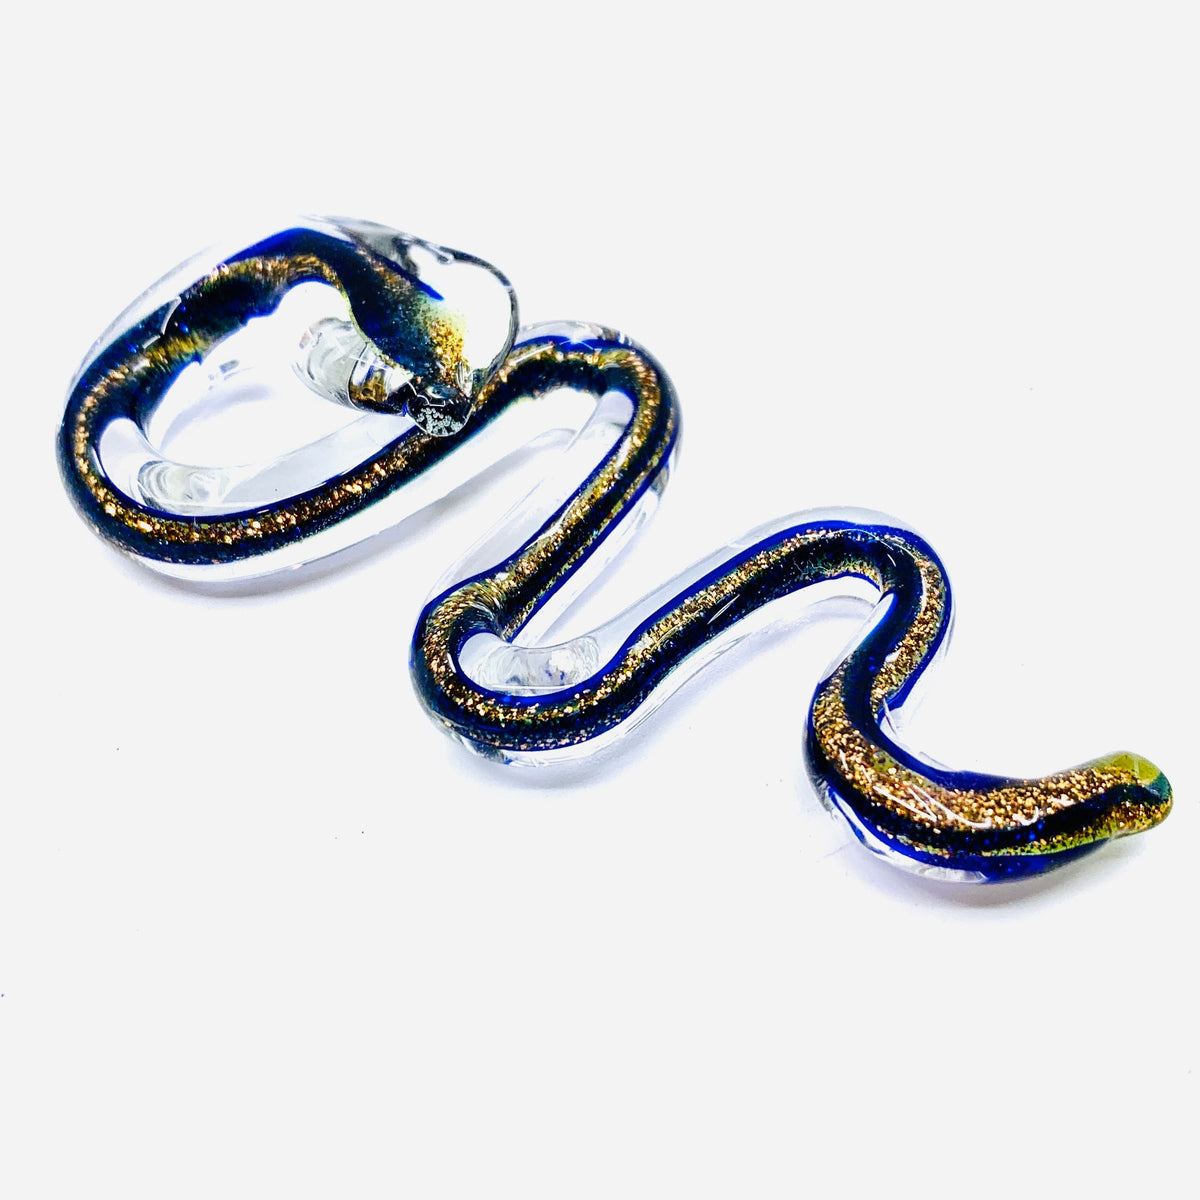 Glitter Snake Miniature - Blue and Gold 